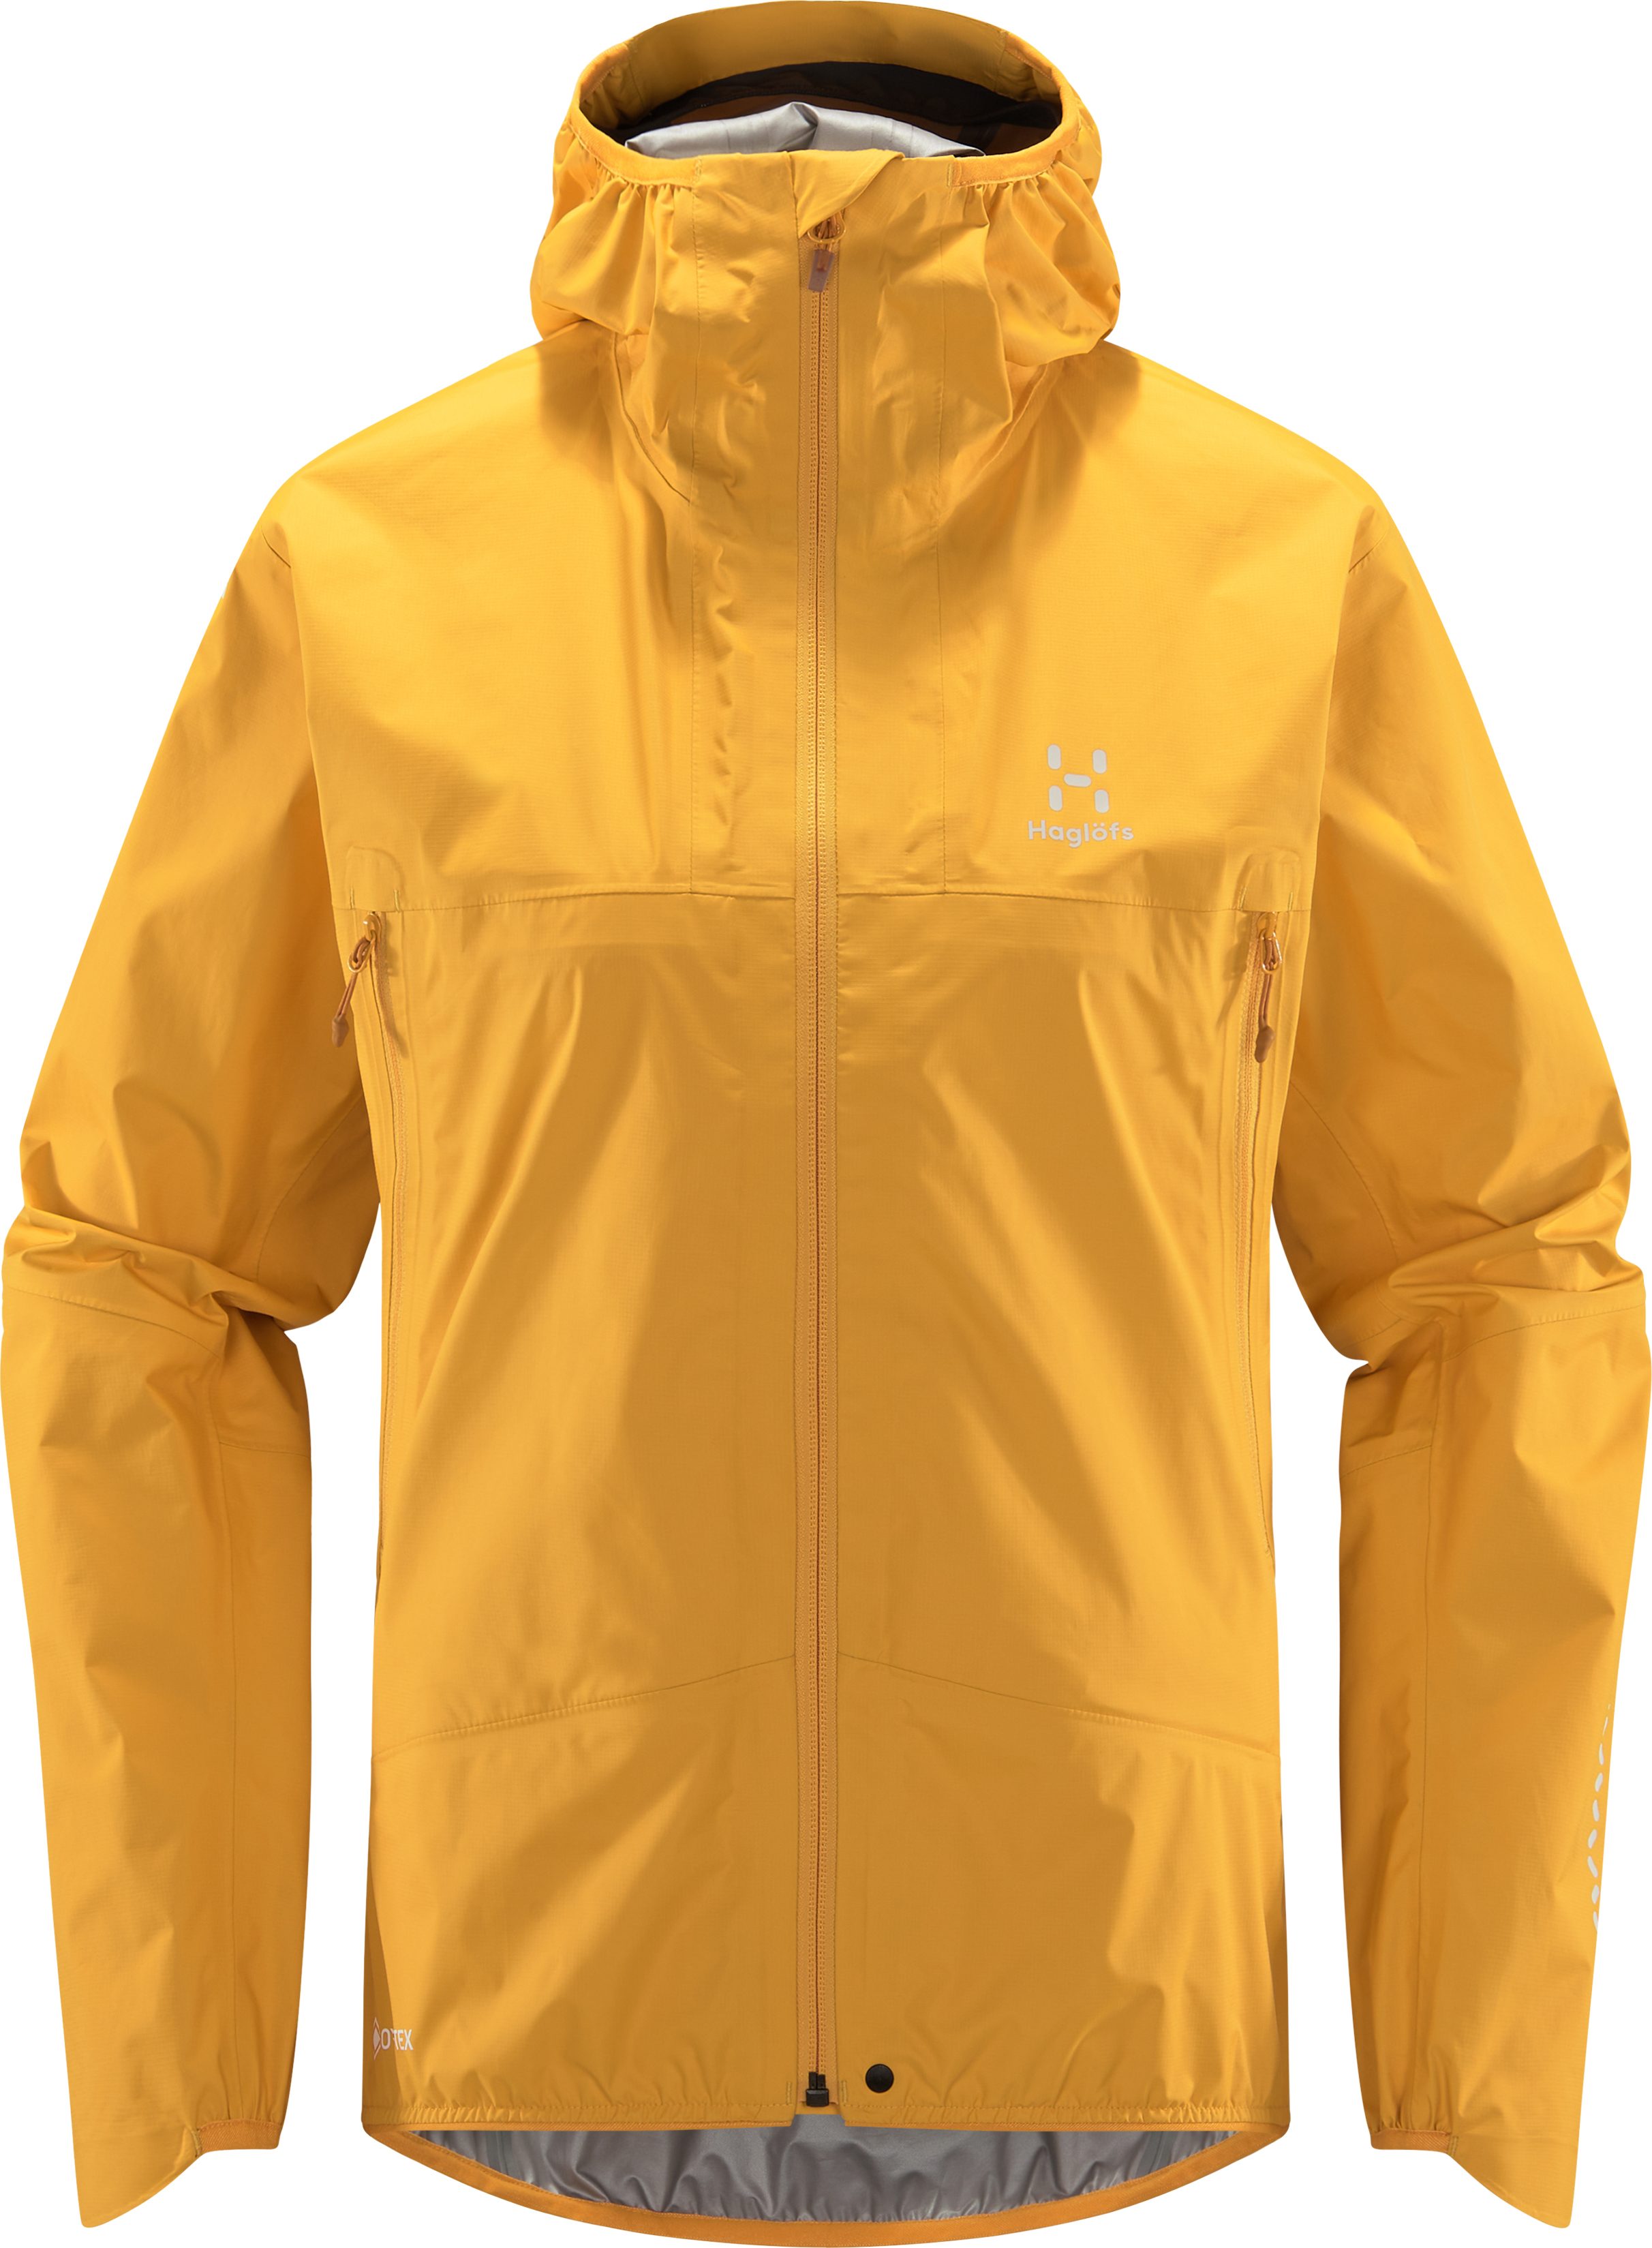 Women’s L.I.M Gore-Tex II Jacket Sunny Yellow